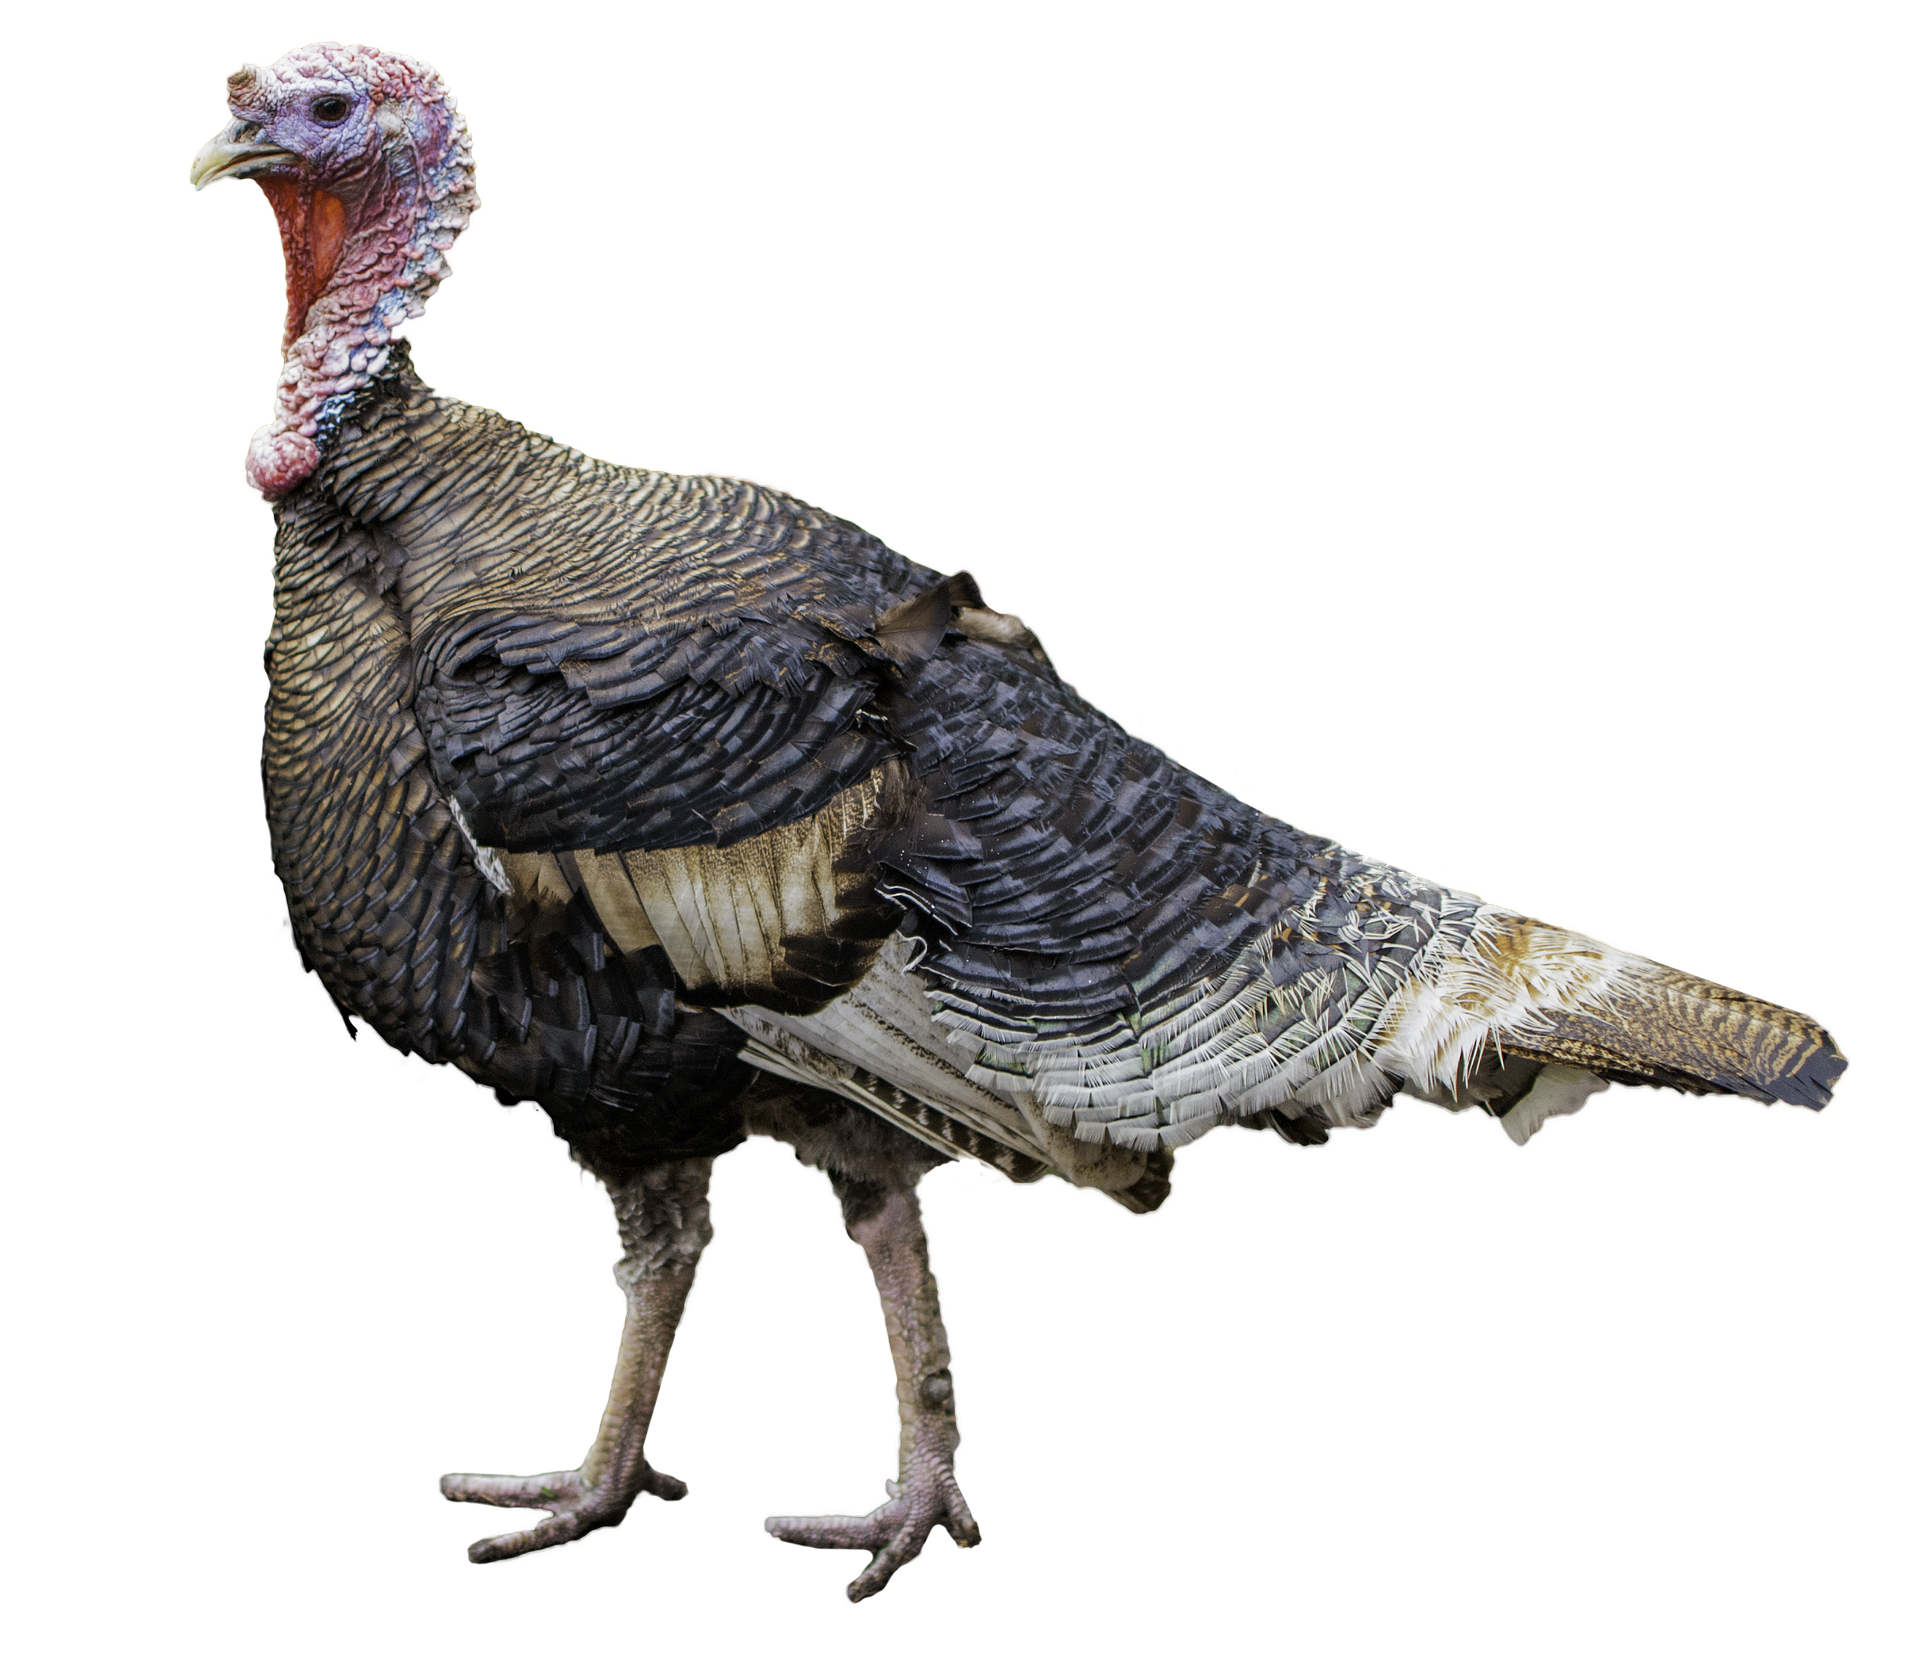 Image of a turkey